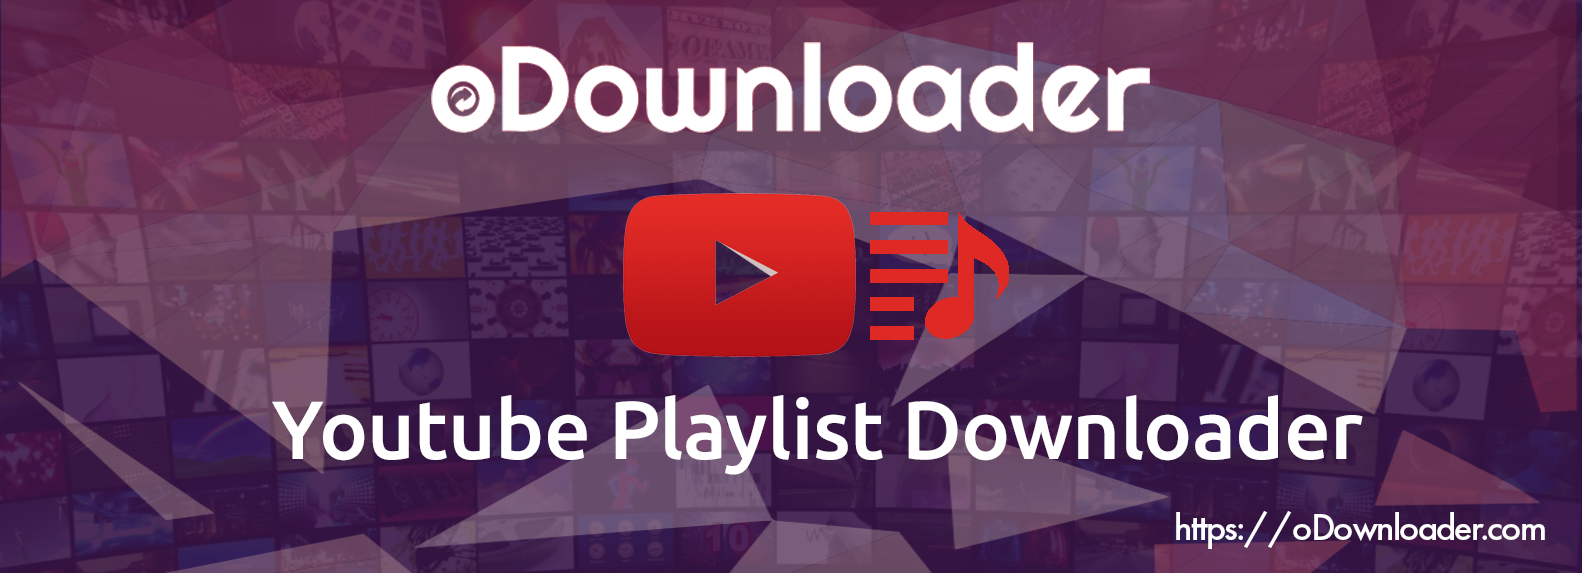 free 1080p youtube playlist downloader